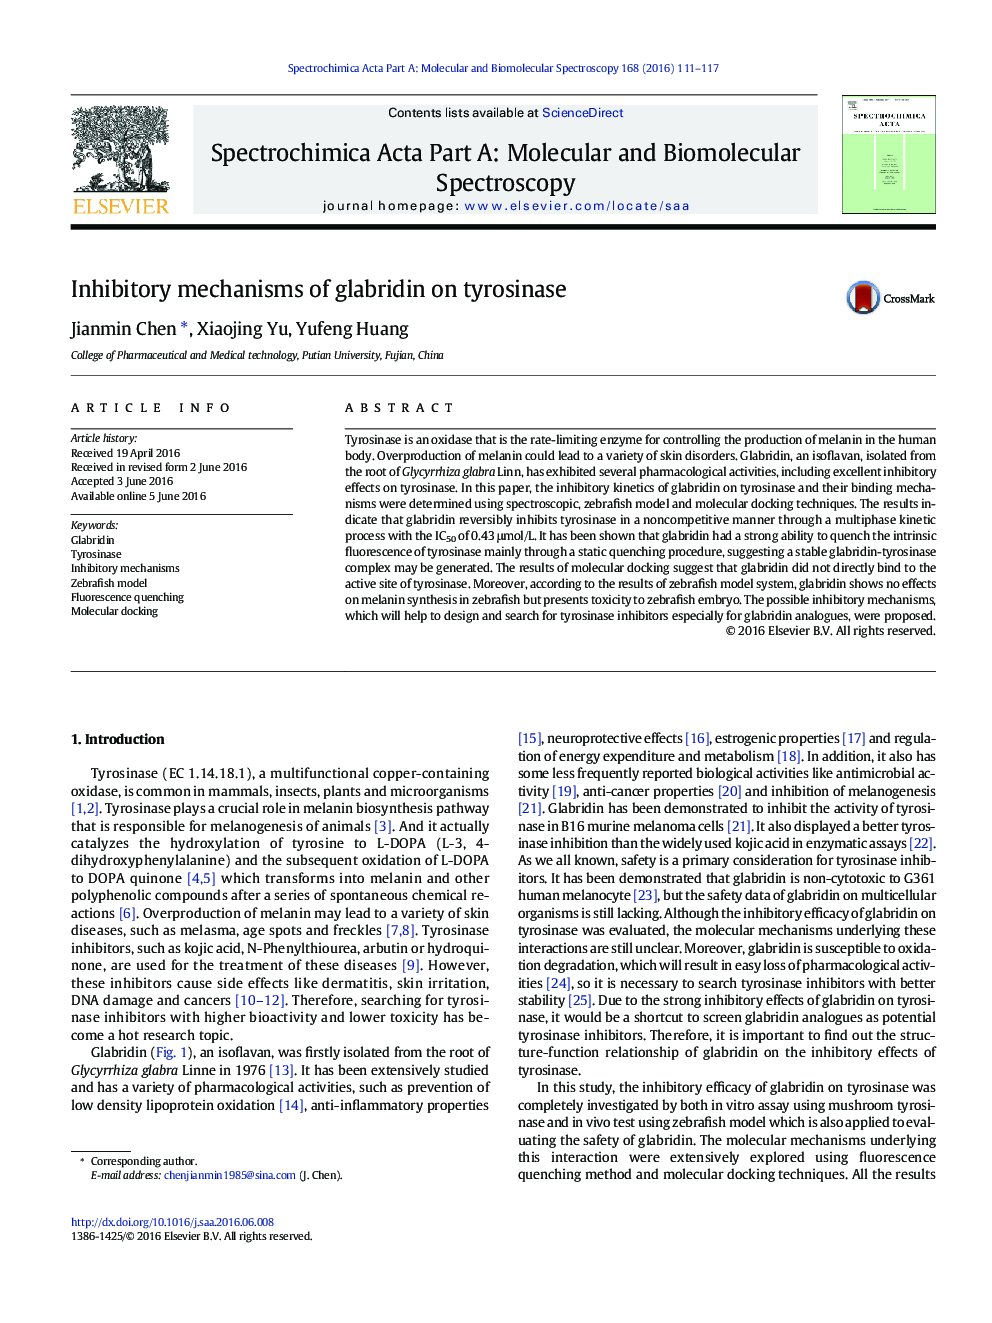 Inhibitory mechanisms of glabridin on tyrosinase